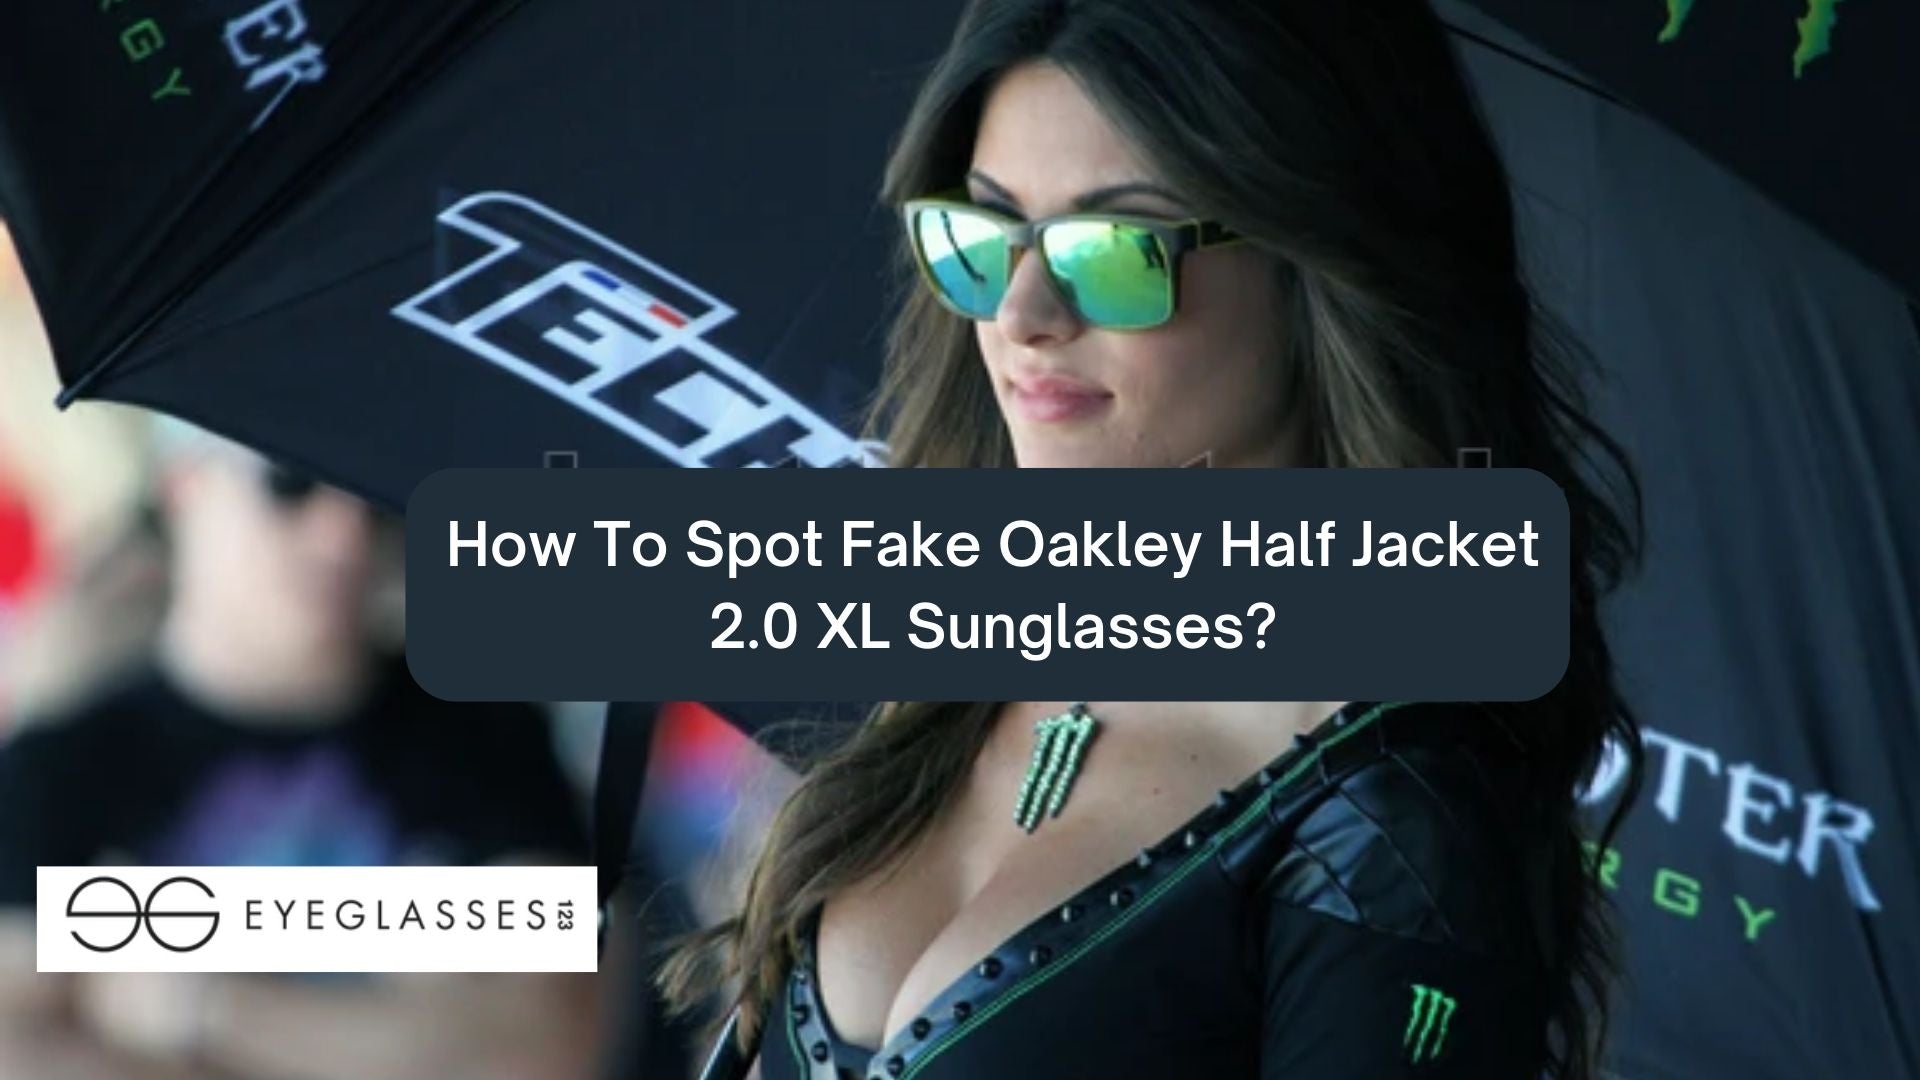 How To Spot Fake Oakley Half Jacket 2.0 XL Sunglasses?